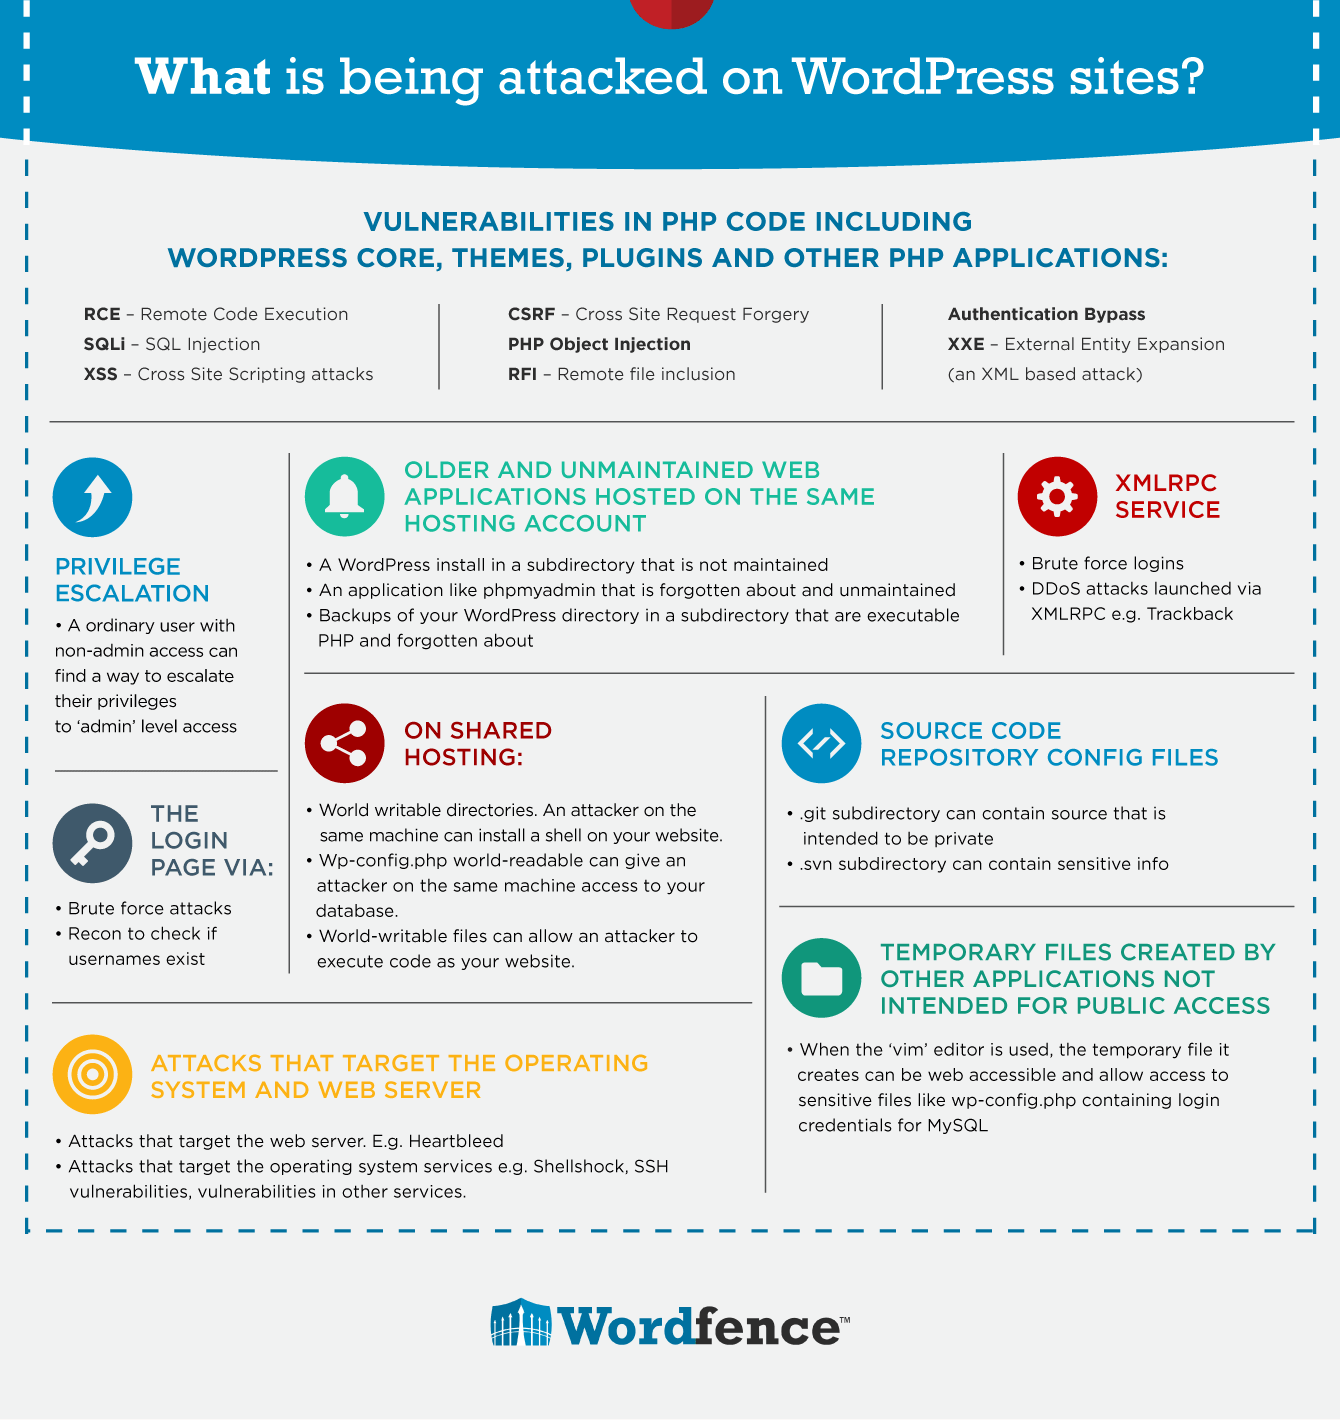 WordPress Security Infographic